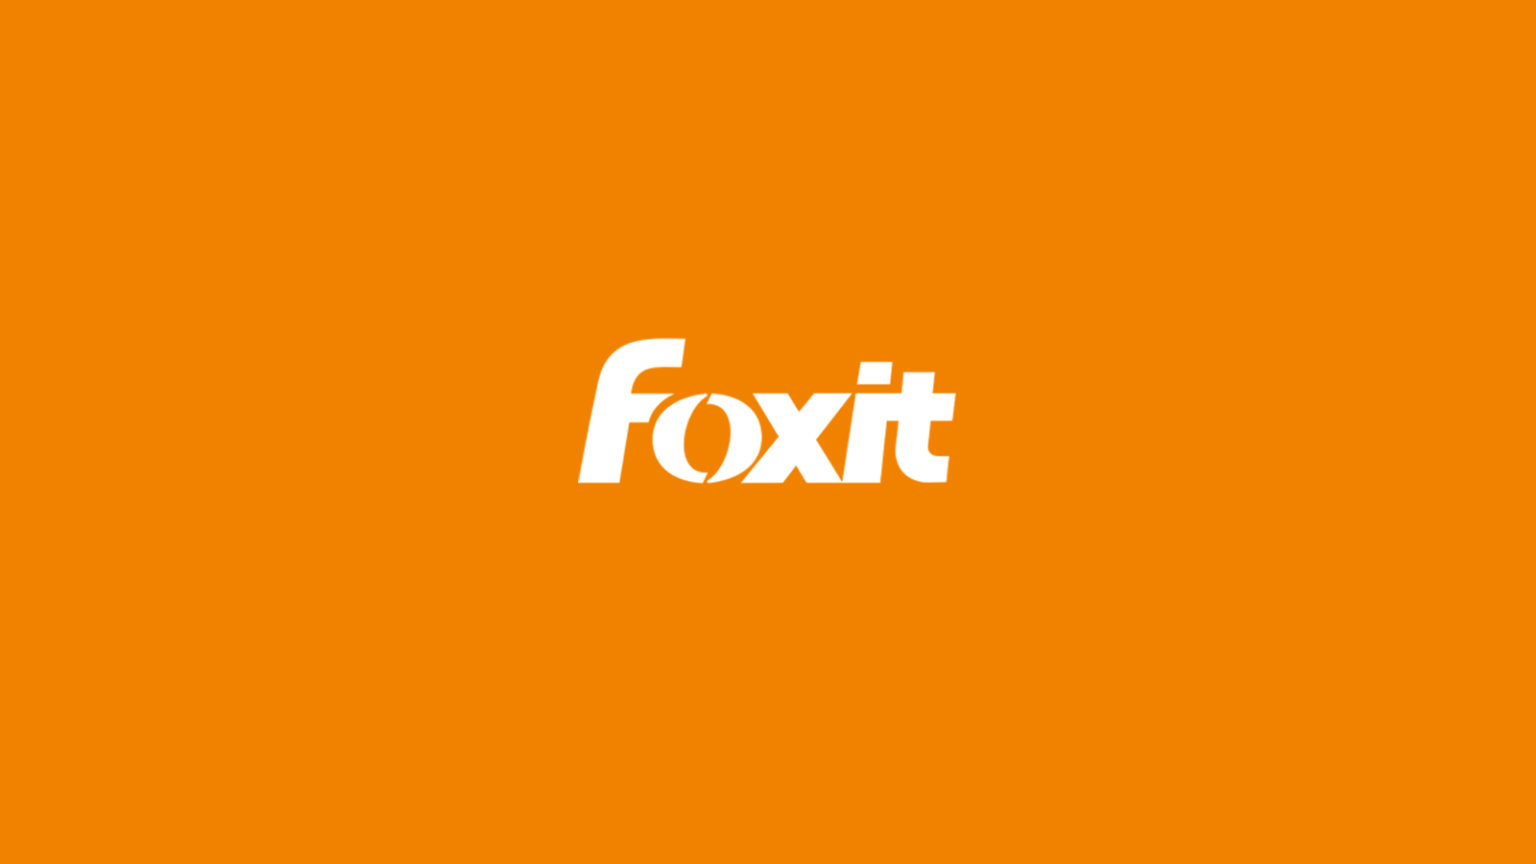 foxit pdf remove pages